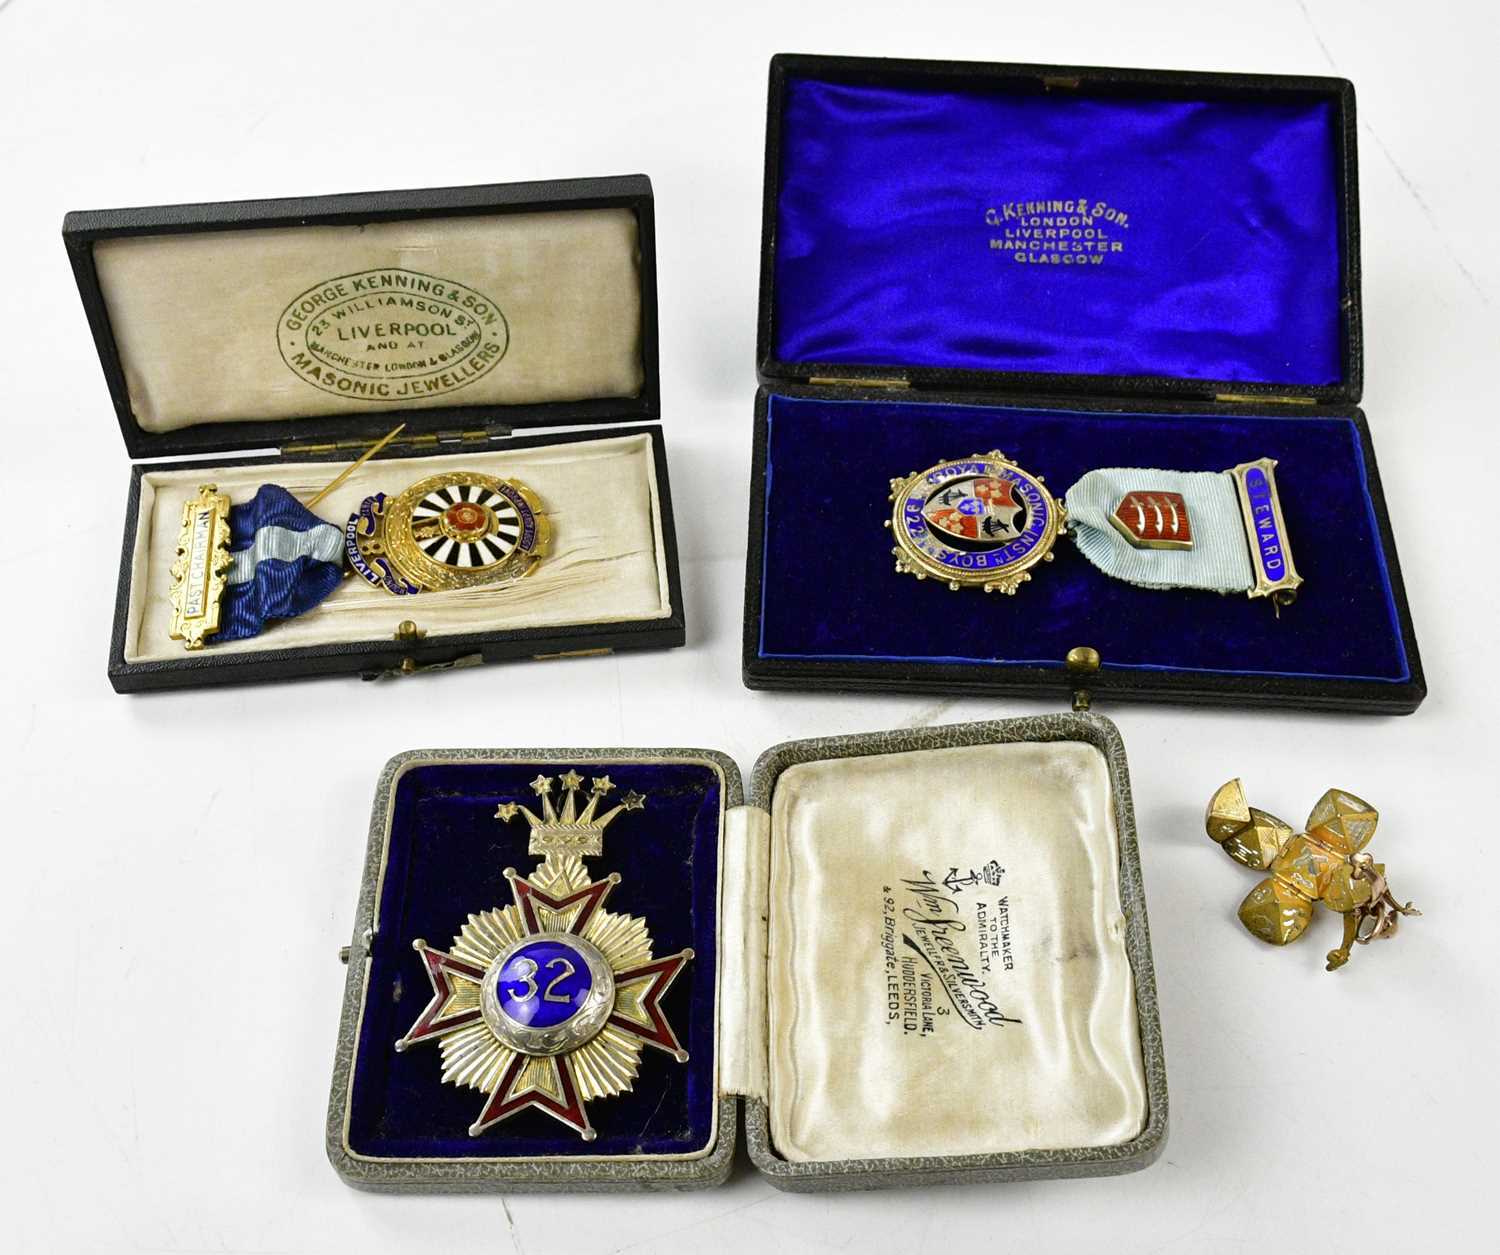 MASONIC INTEREST; a hallmarked silver and enamel Masonic Rose Croix 32nd Degree jewel, a further